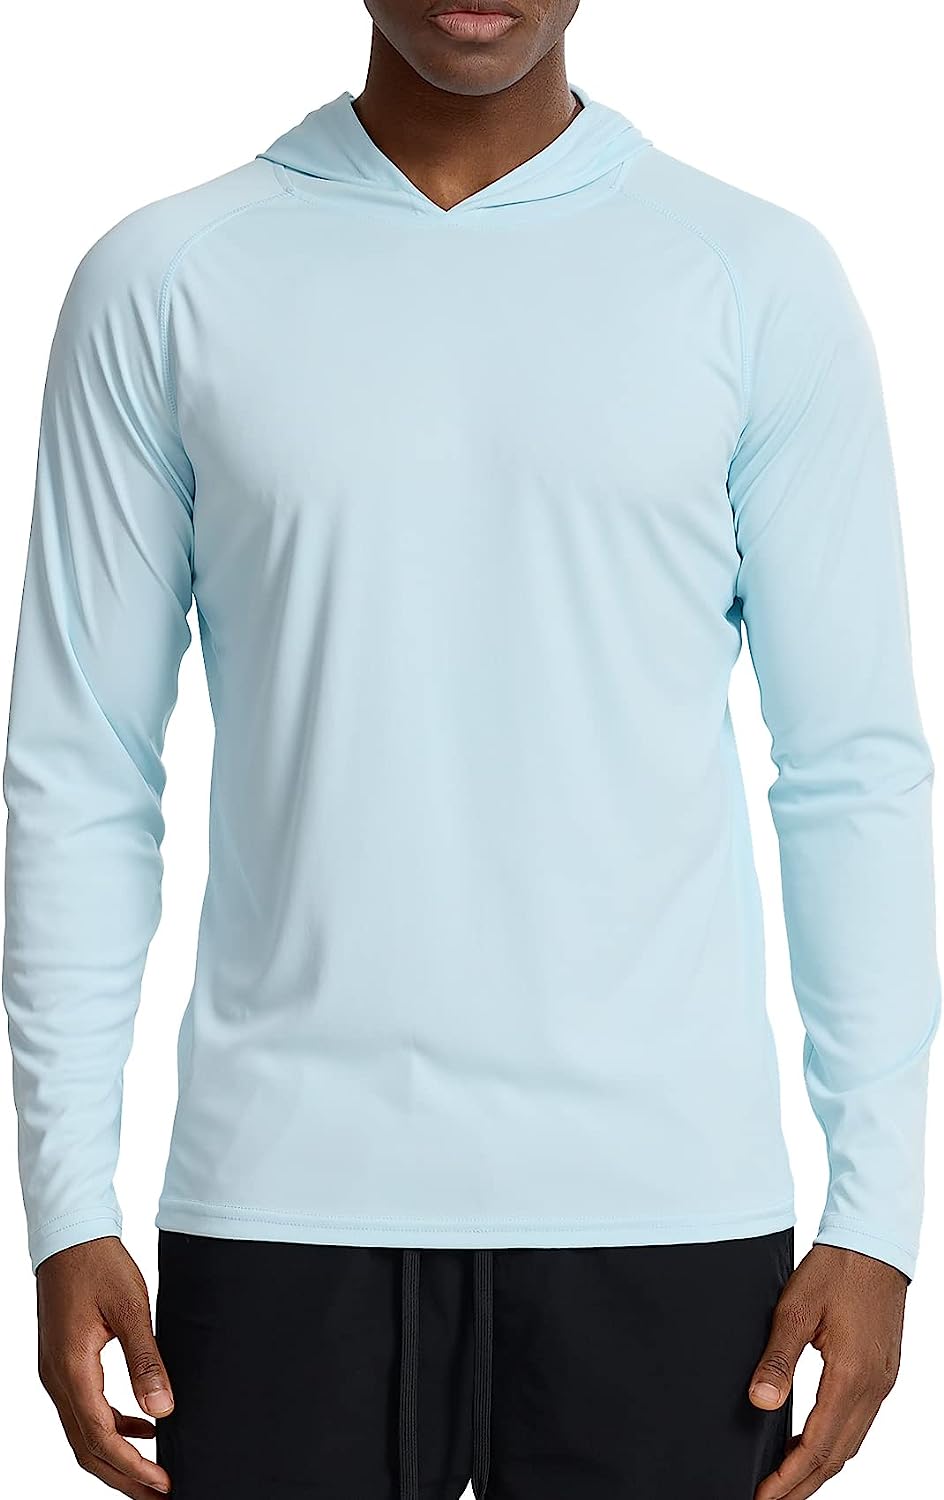 Zengjo Men's Lightweight Pullover Hoodie - Hooded Long Sleeve Workout Shirts